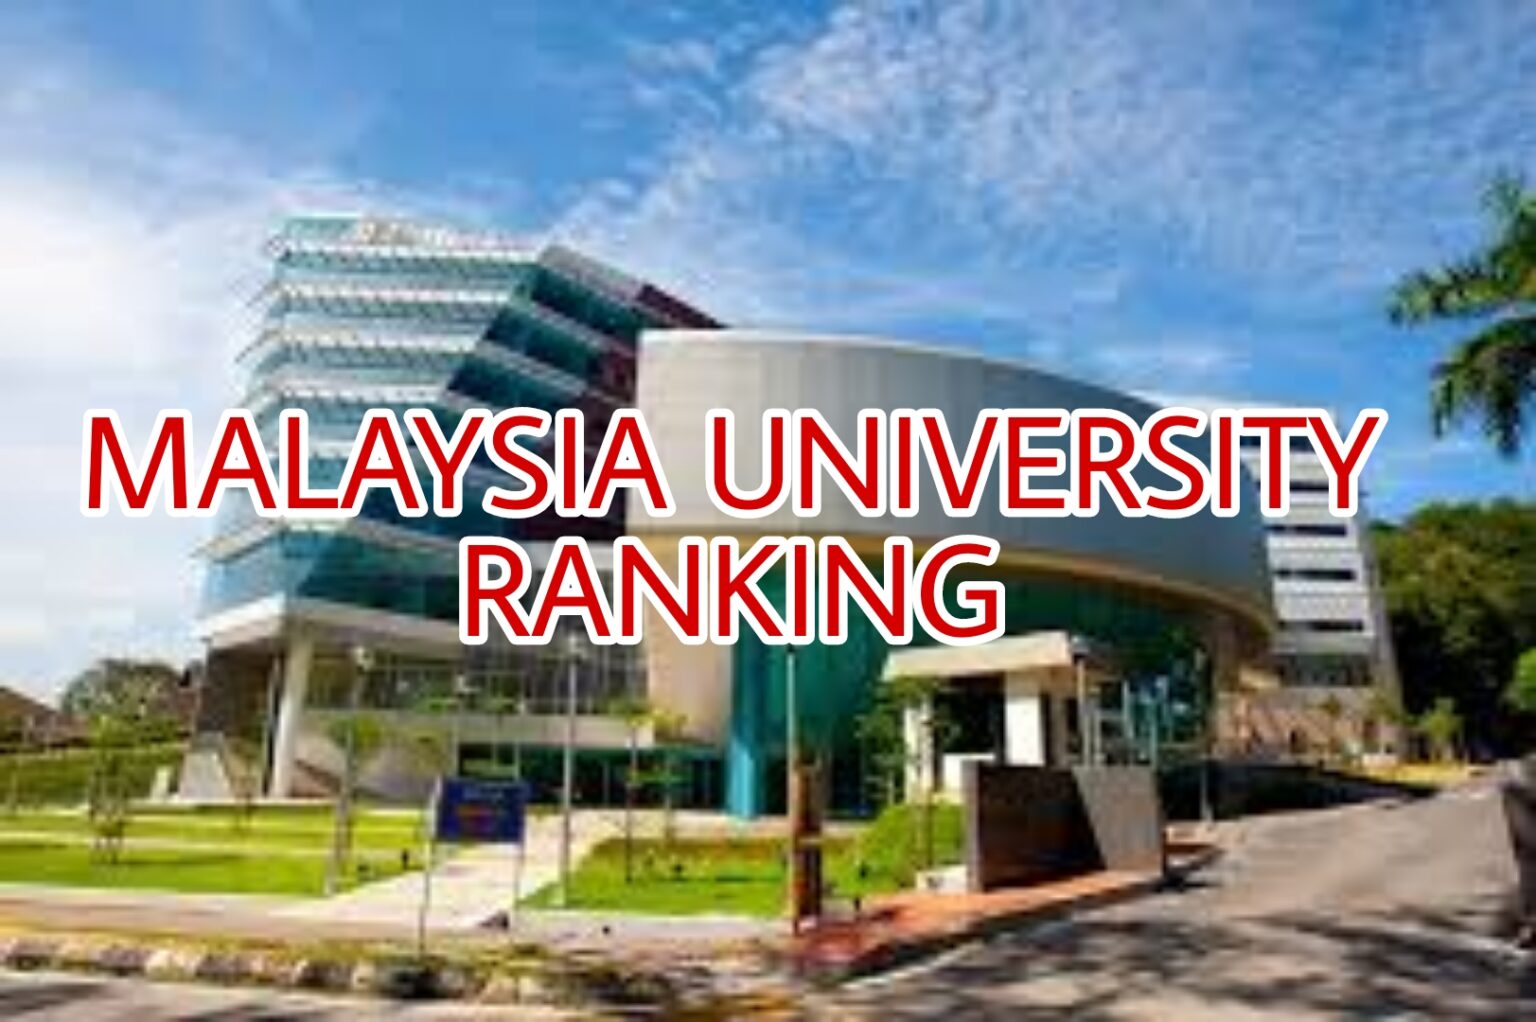 Malaysia University Ranking 2021/2022